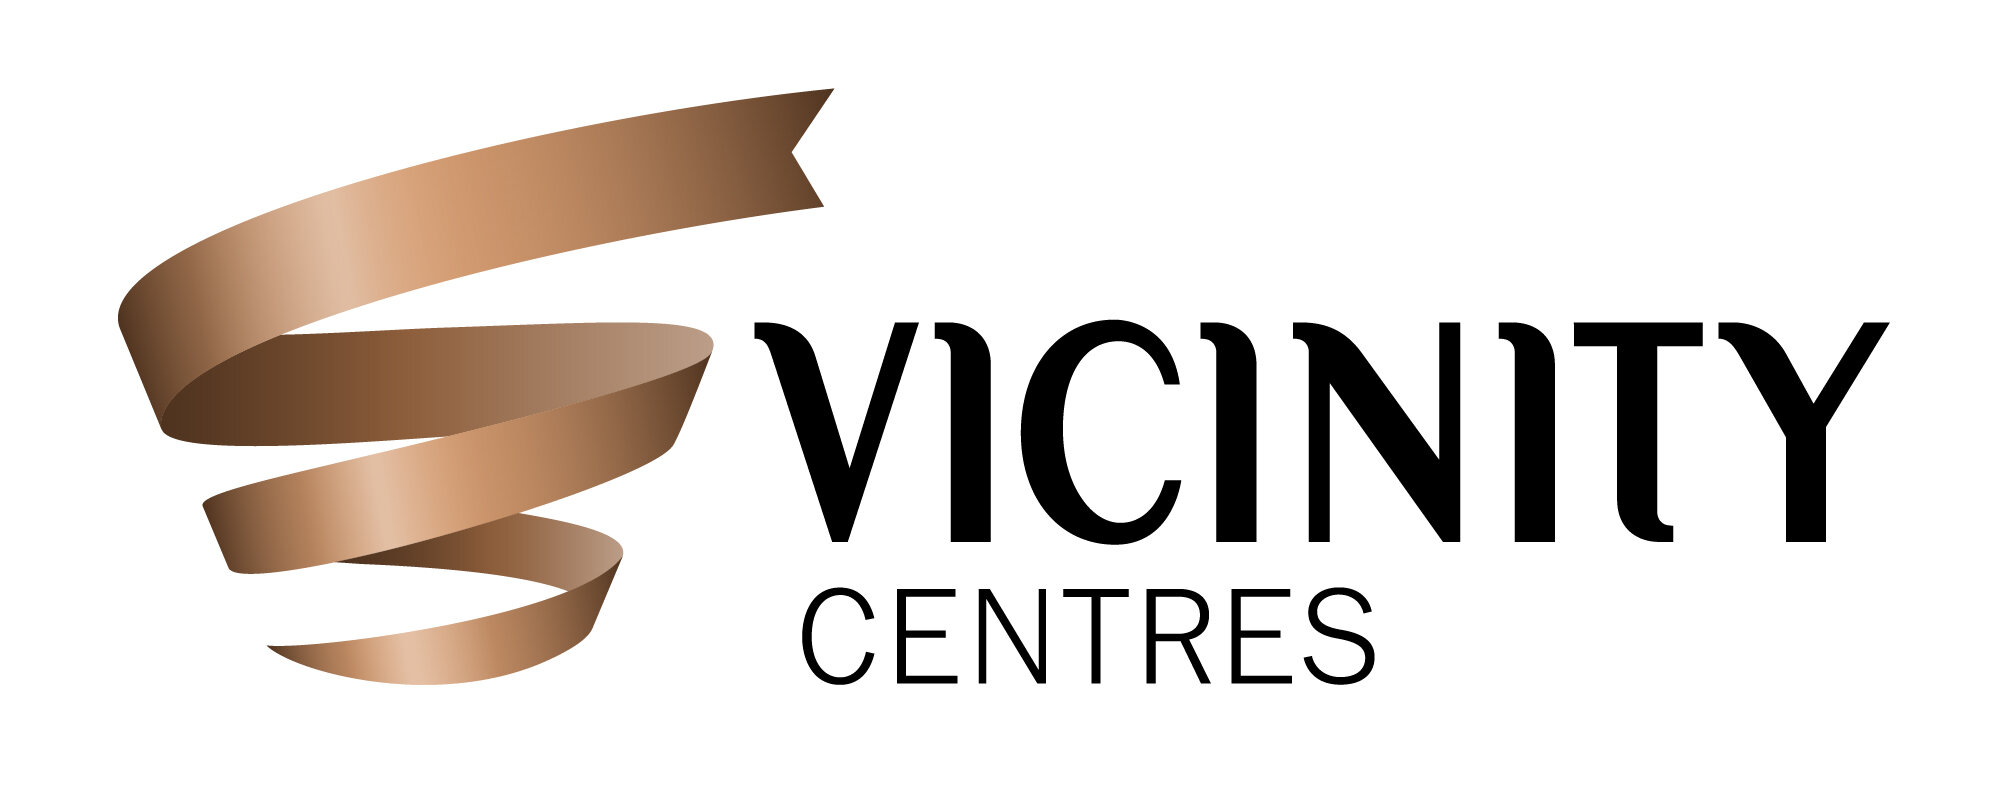 Vicinity Centres.jpg